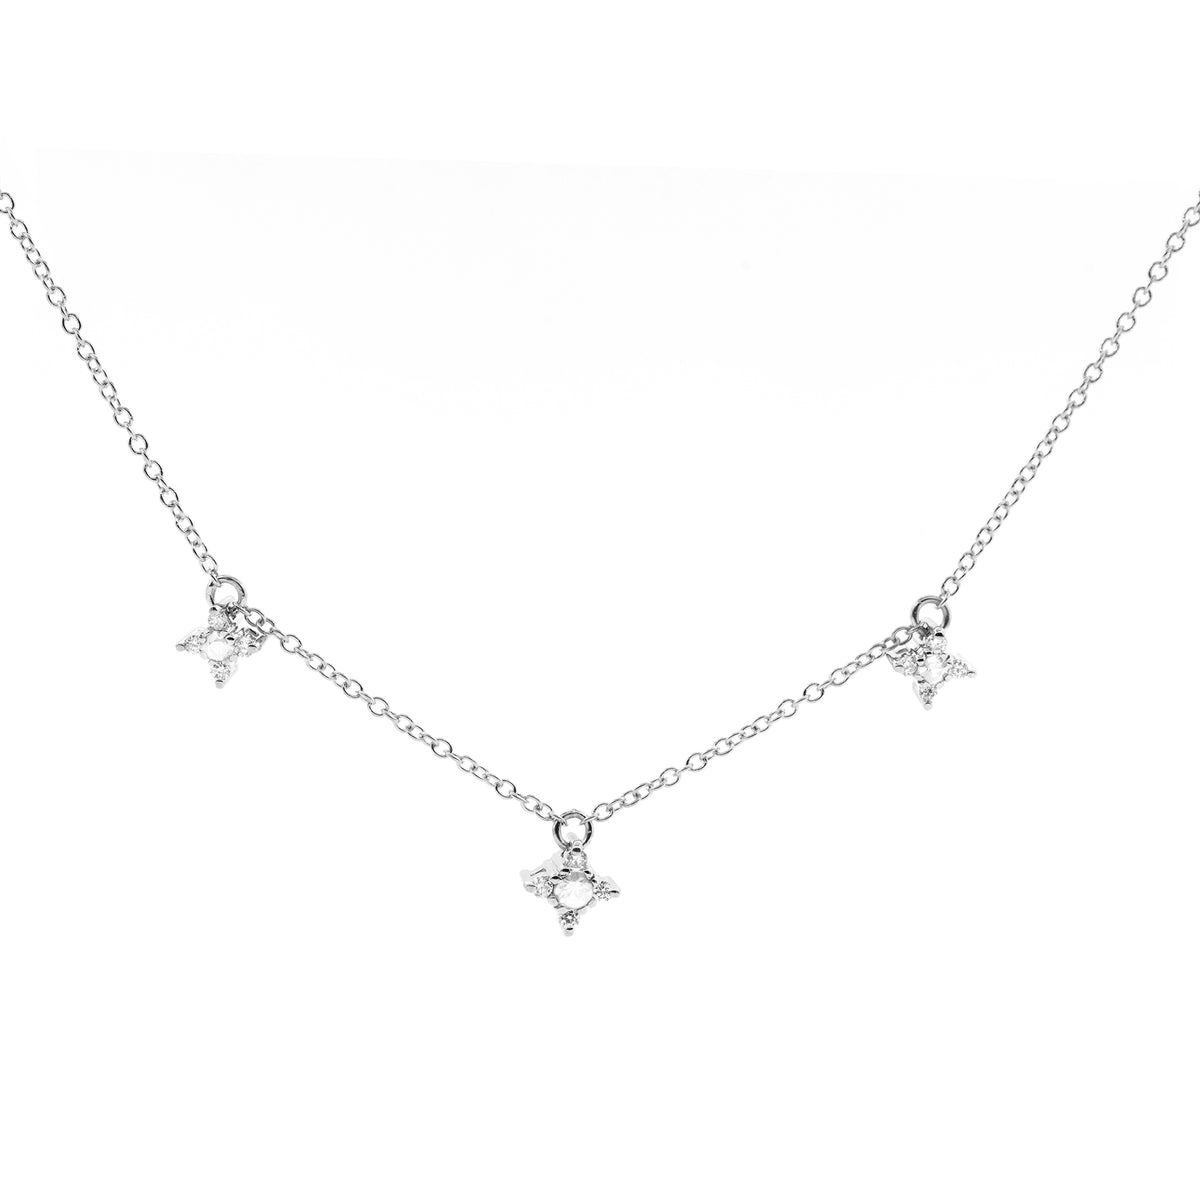 Diana 102 necklace